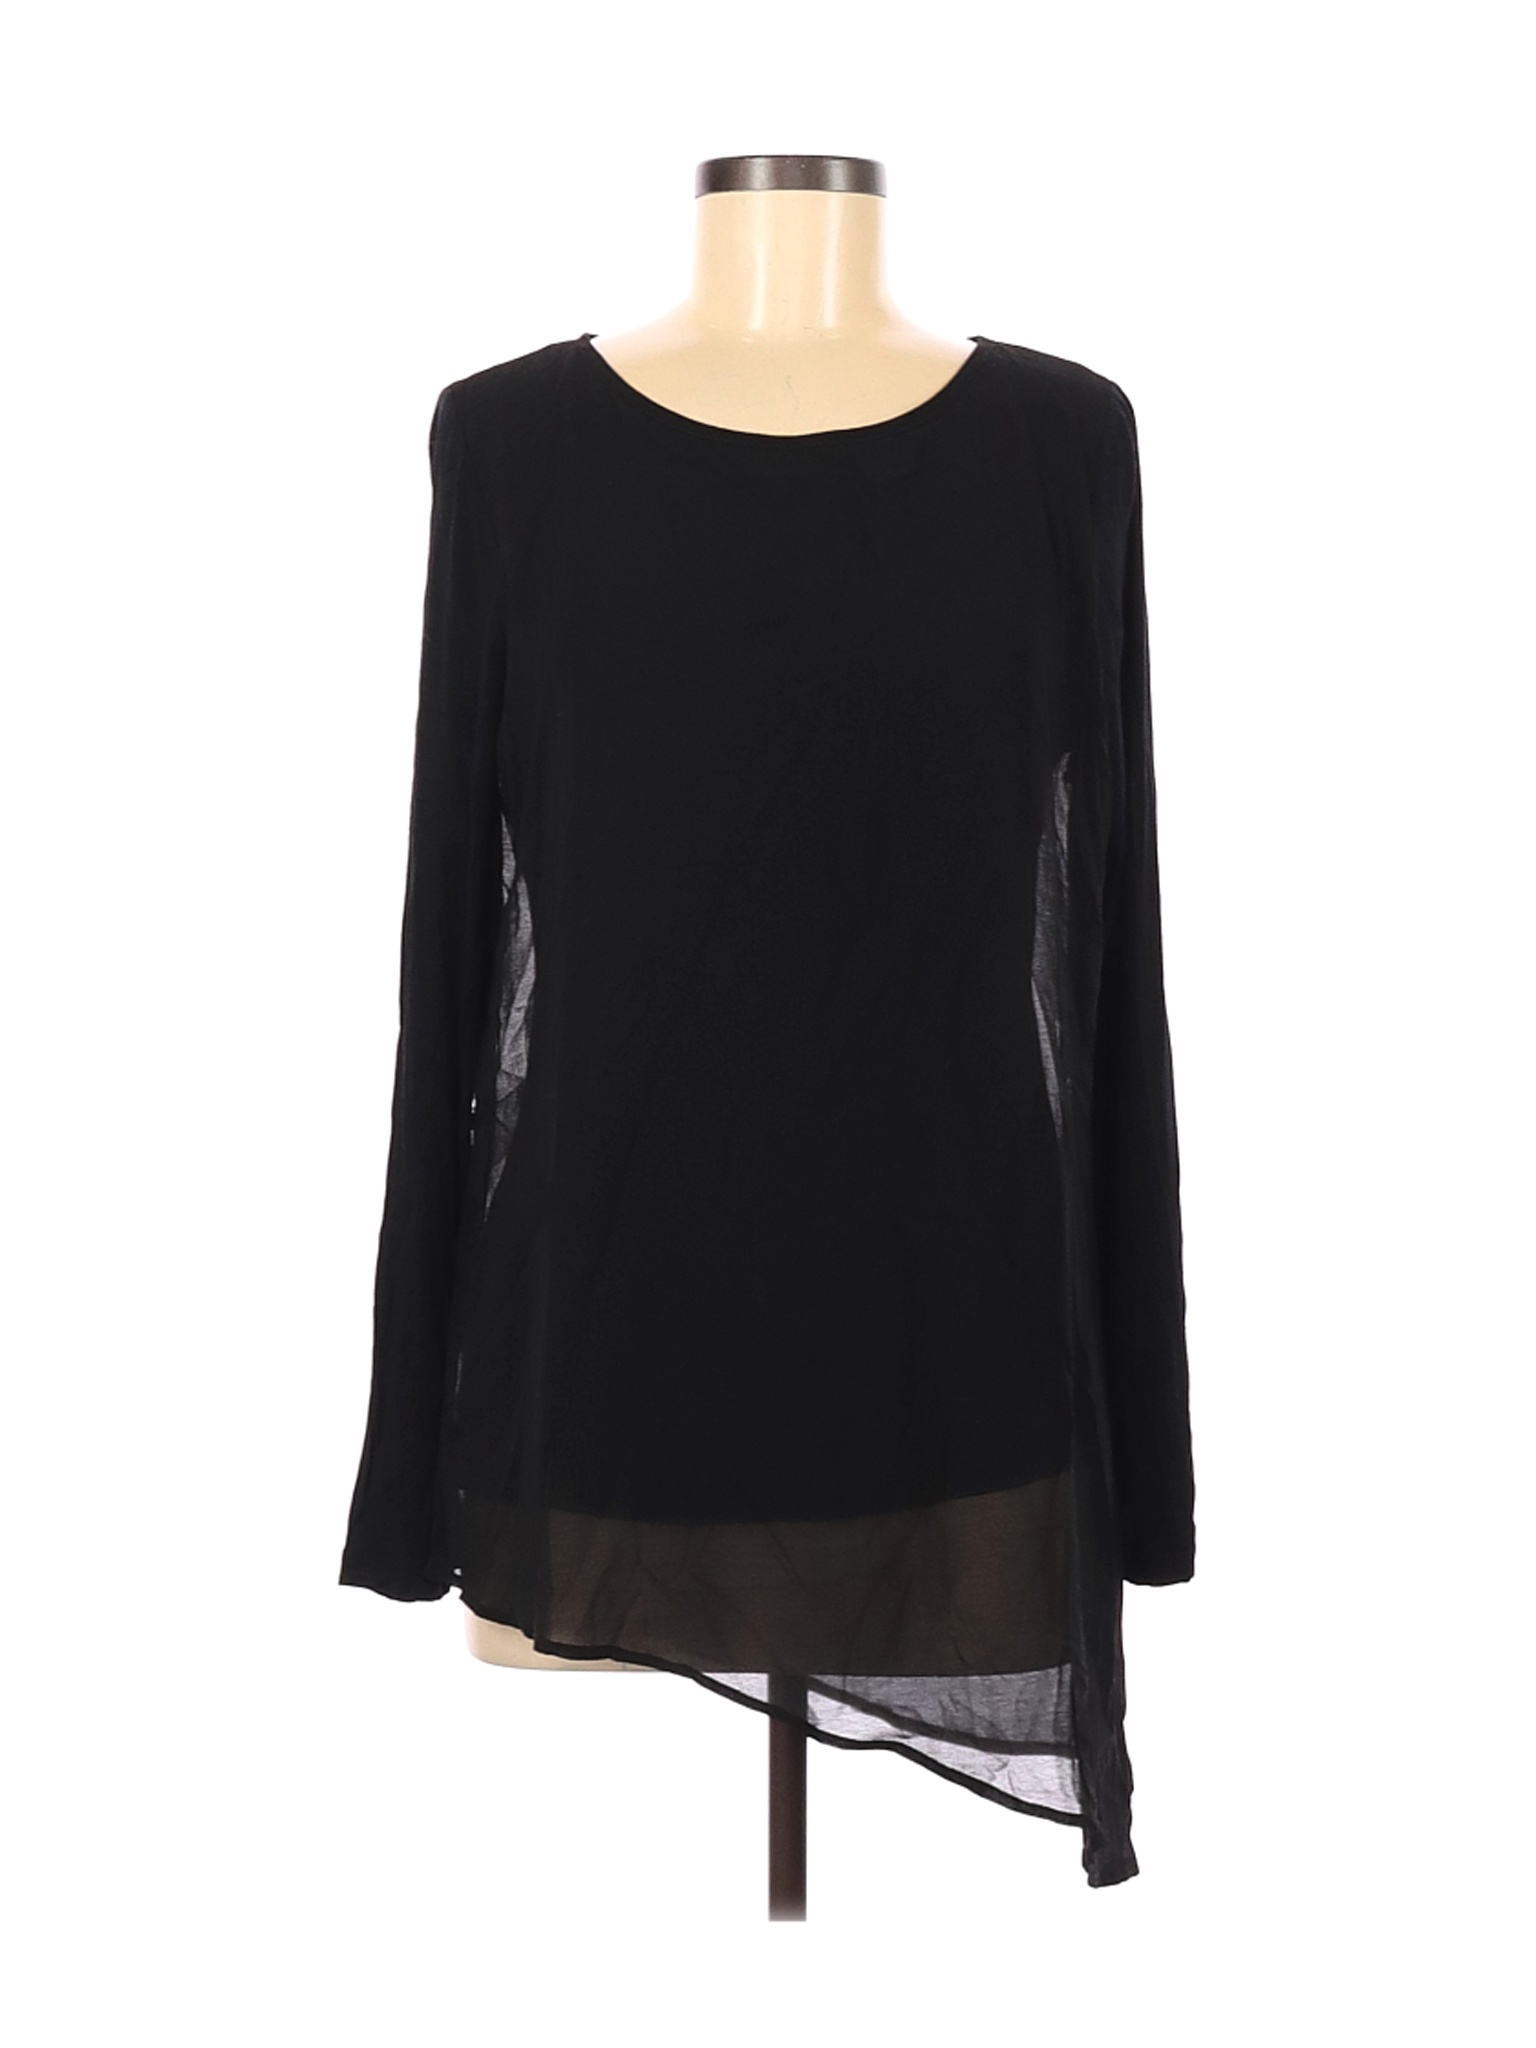 Joan Vass New York Women Black Long Sleeve Top M | eBay